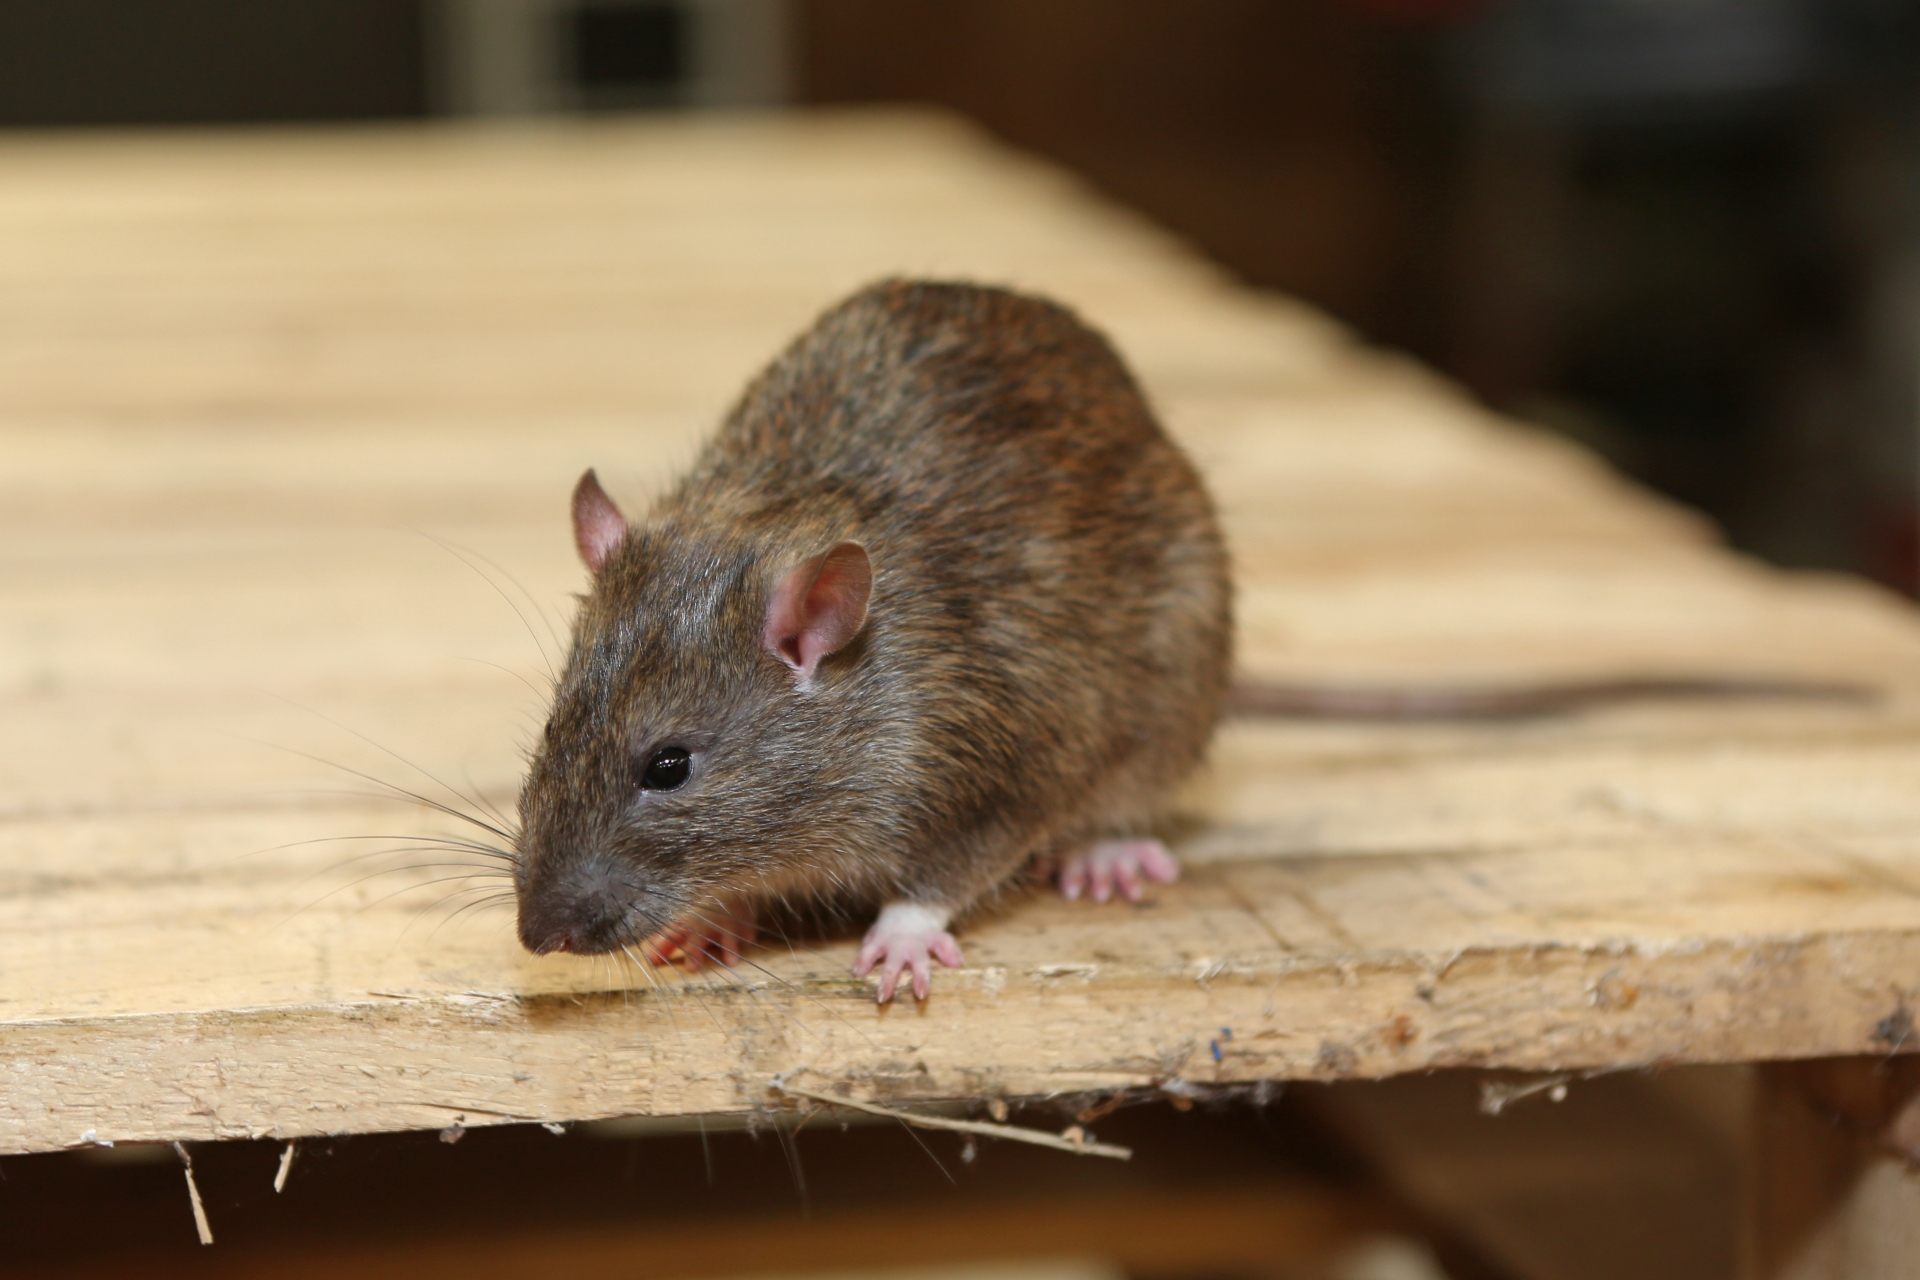 Rat extermination, Pest Control in Northolt, UB5. Call Now 020 8166 9746